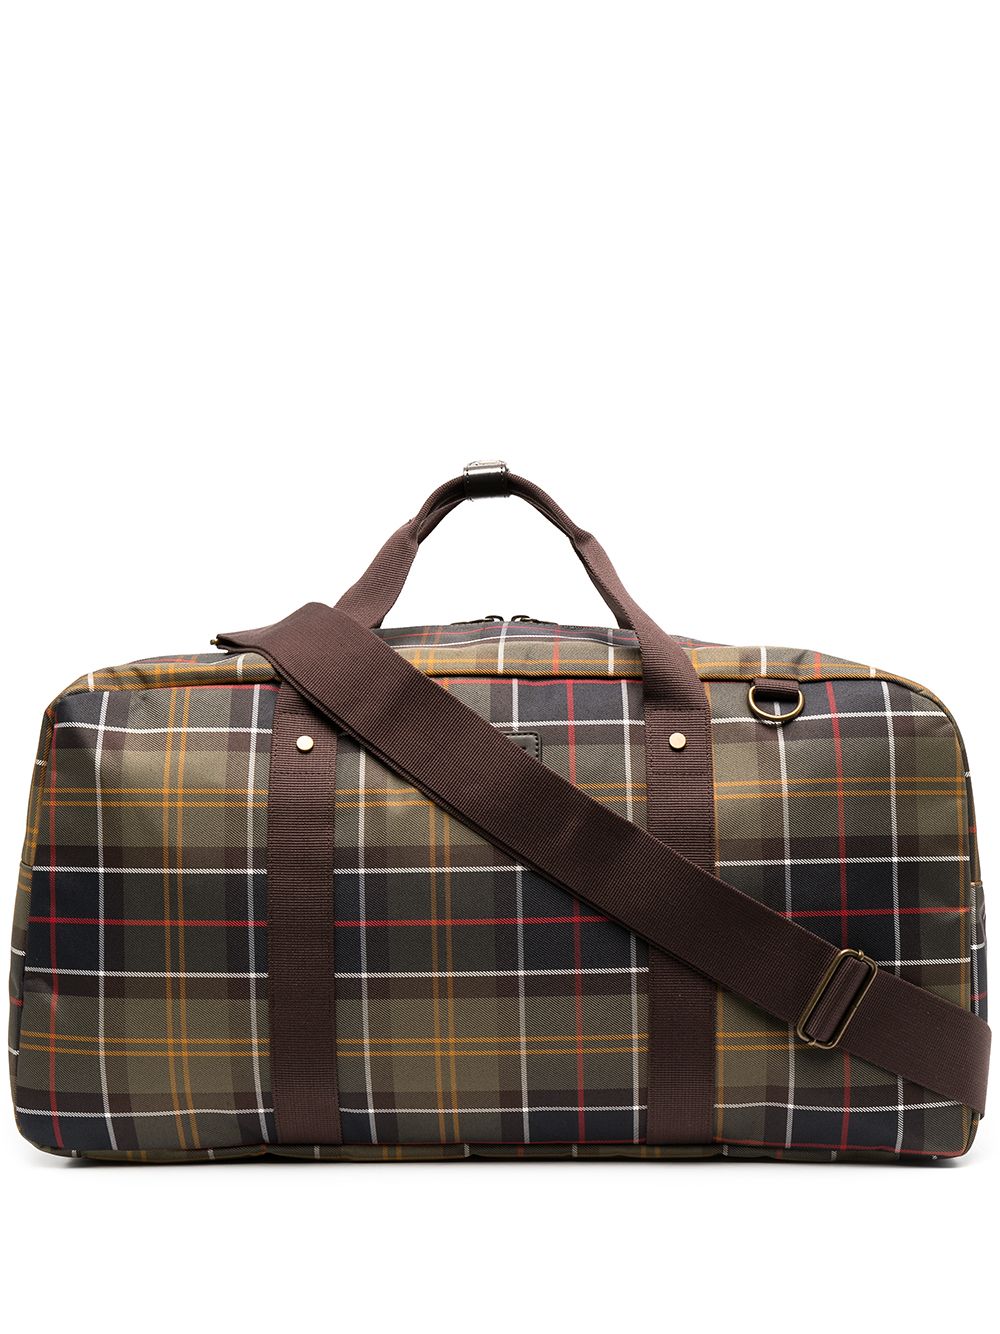 Barbour plaid check luggage bag - Green